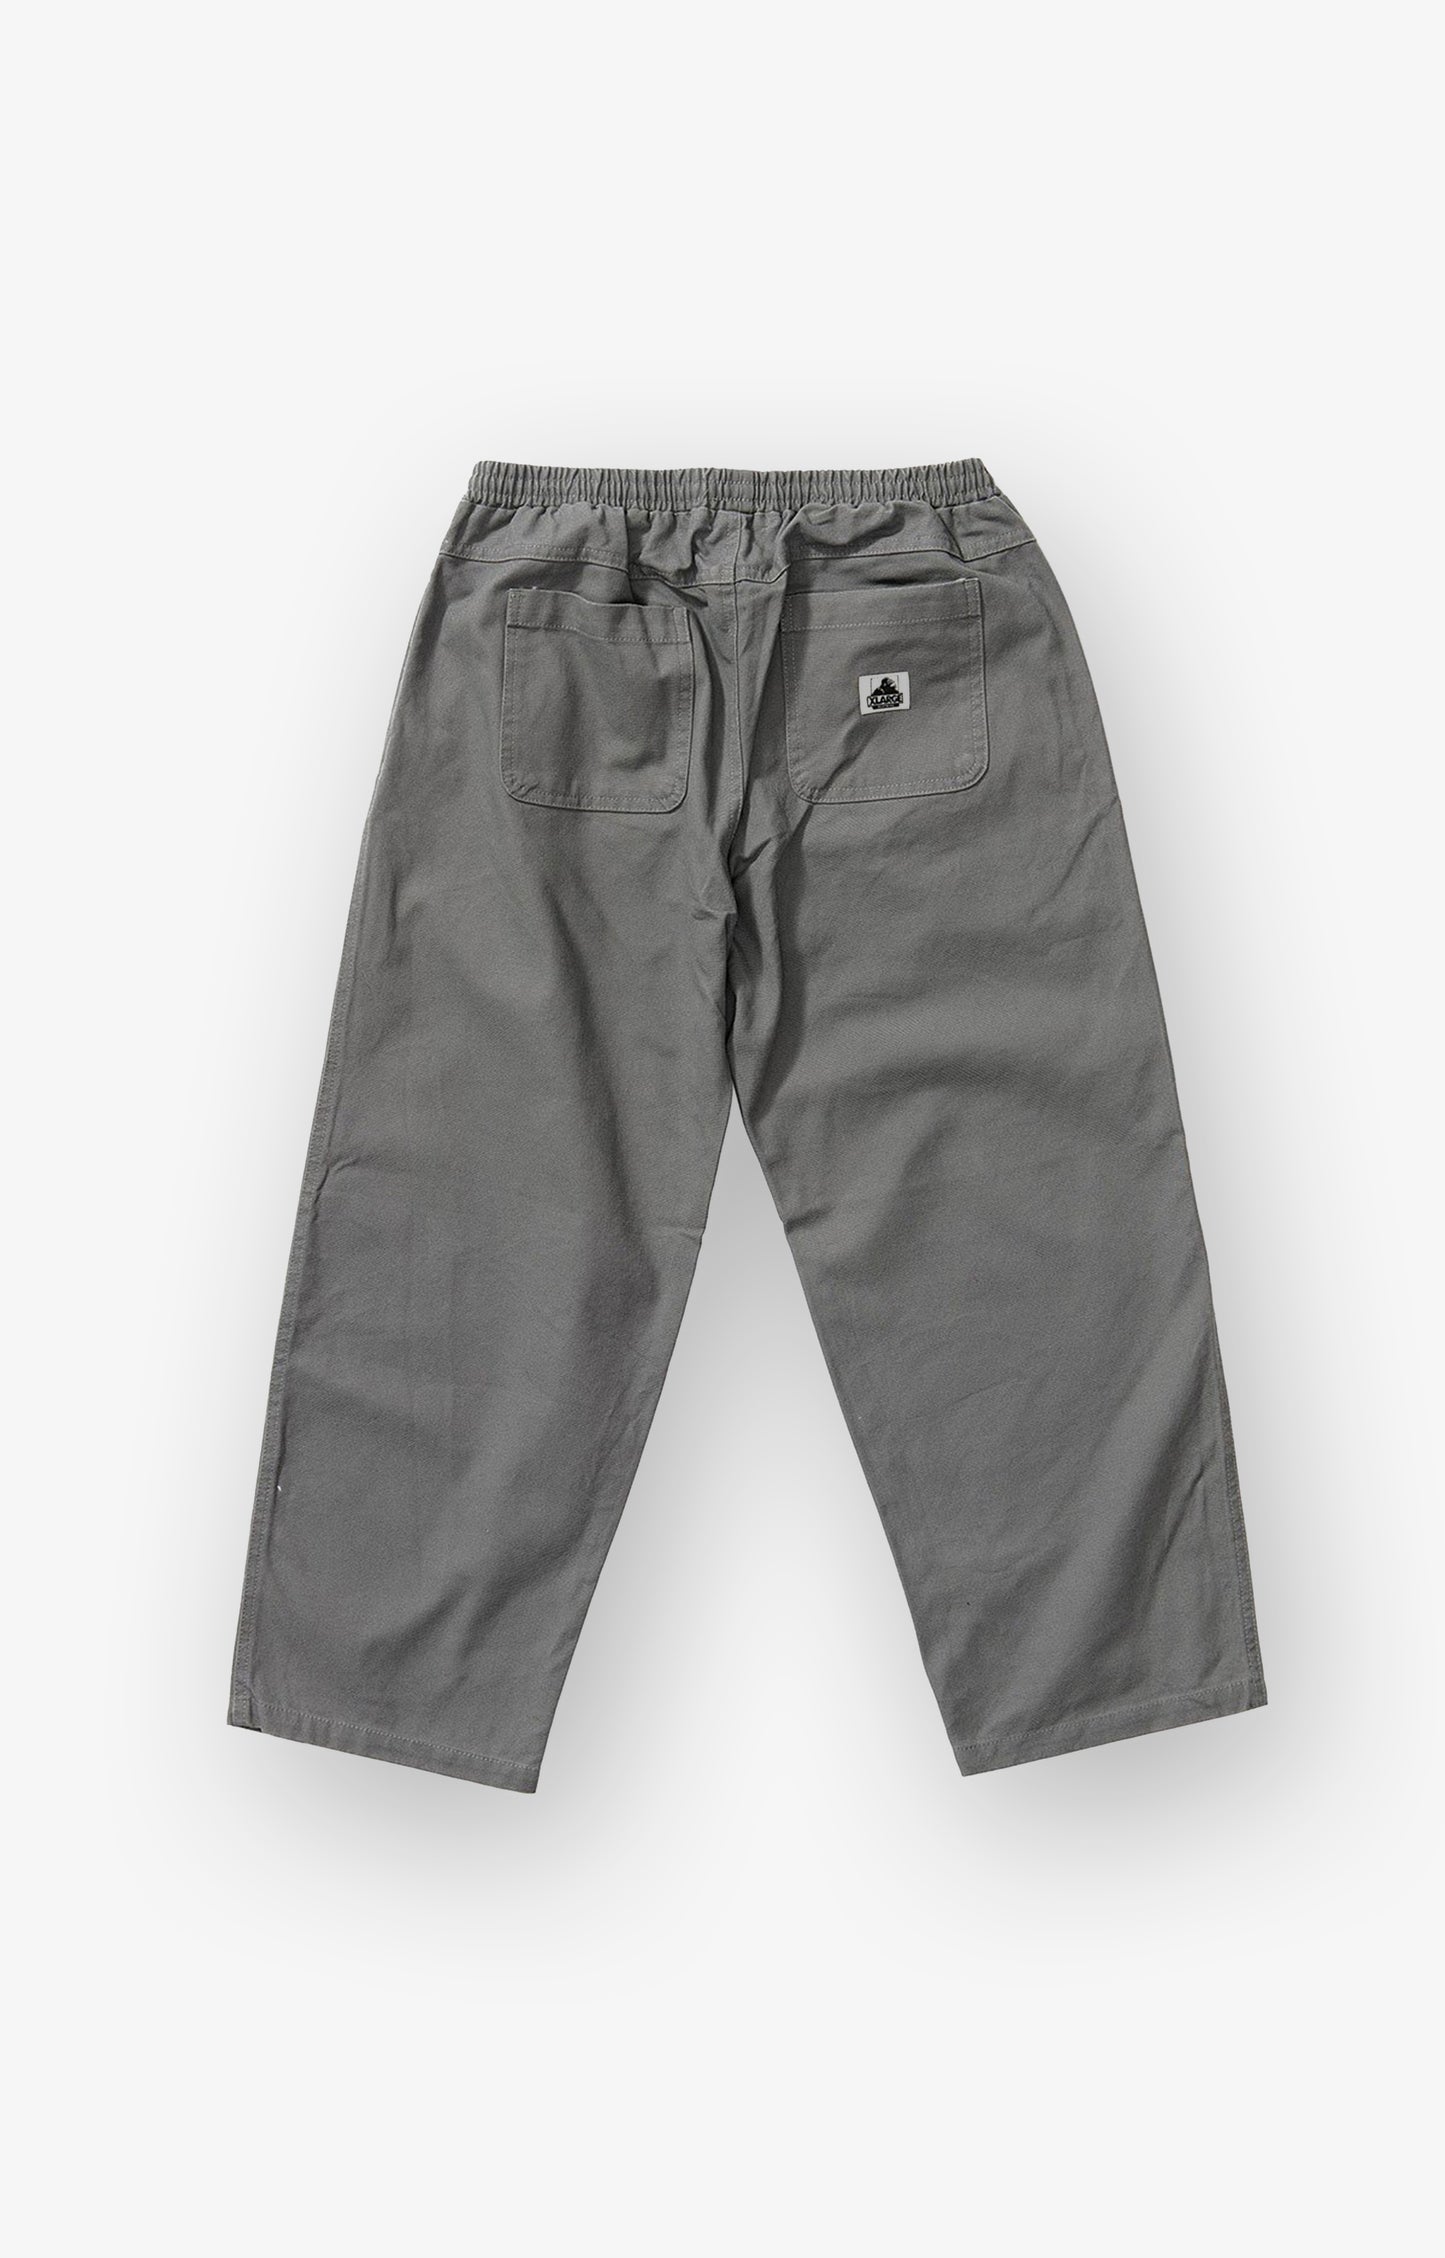 XLarge 91 Pants, Charcoal